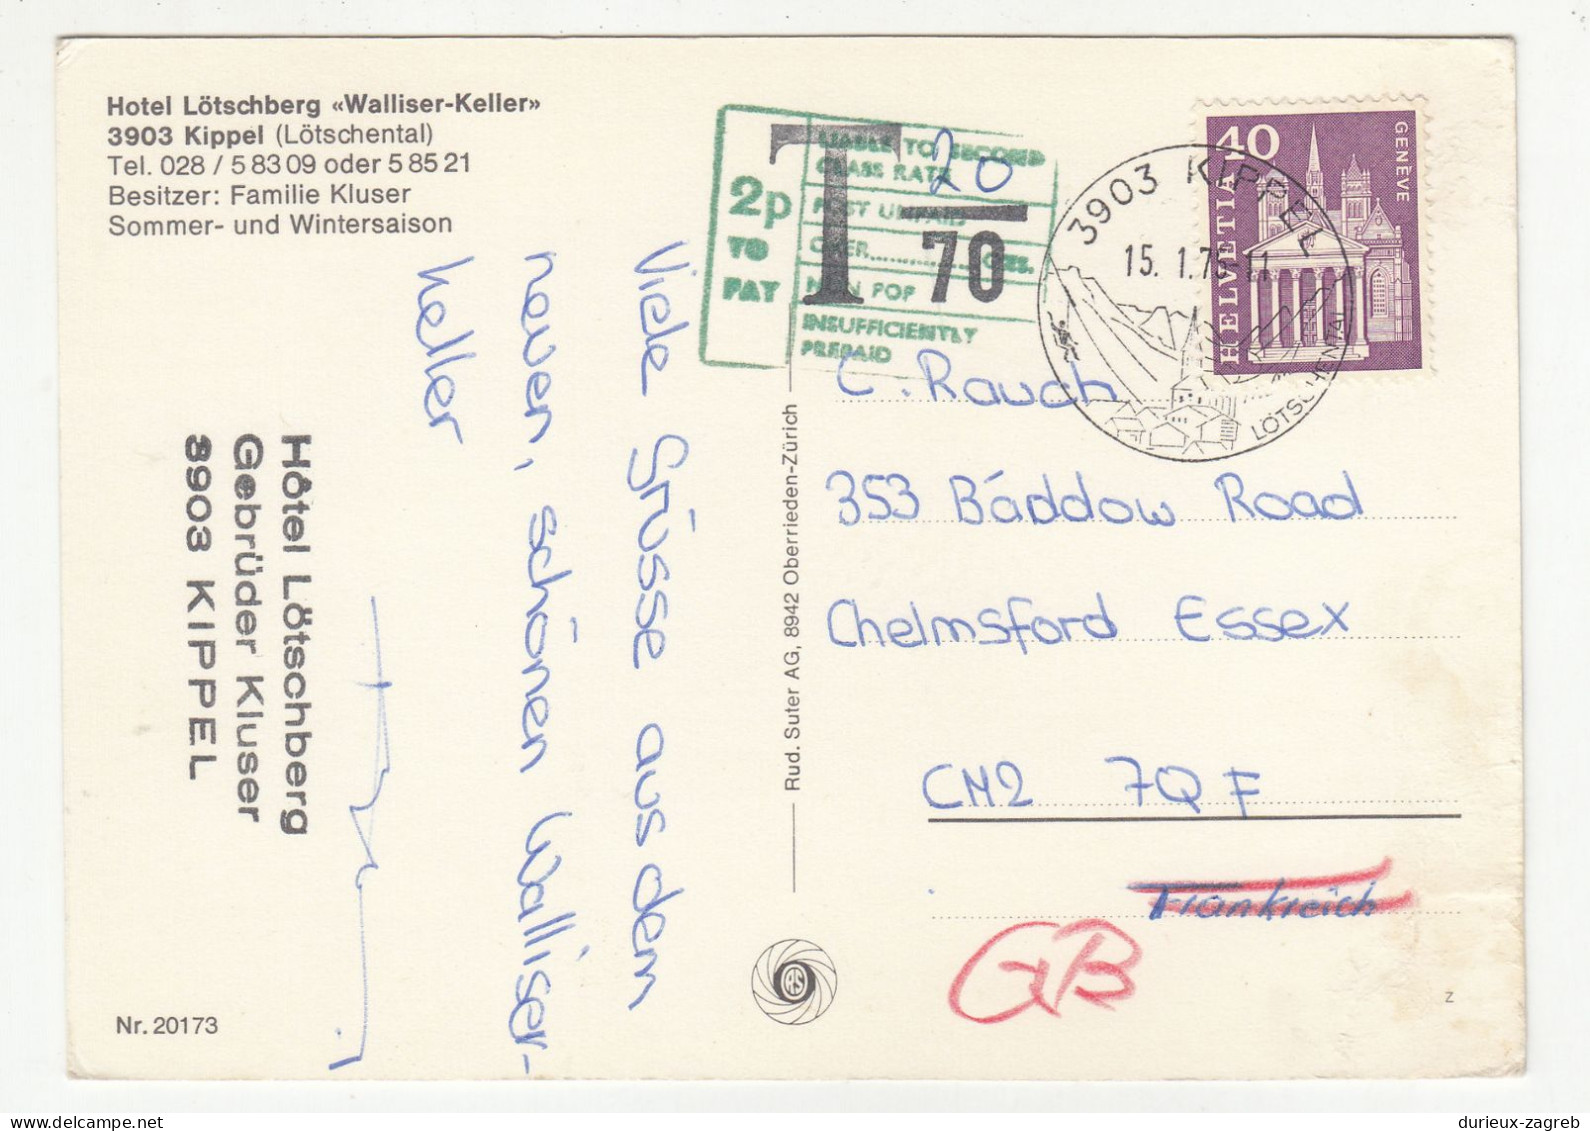 Switzerland Hotel Lötschberg "Walliser-Keller" Postcard Posted 1975 - Taxed Postage Due B240510 - Portomarken